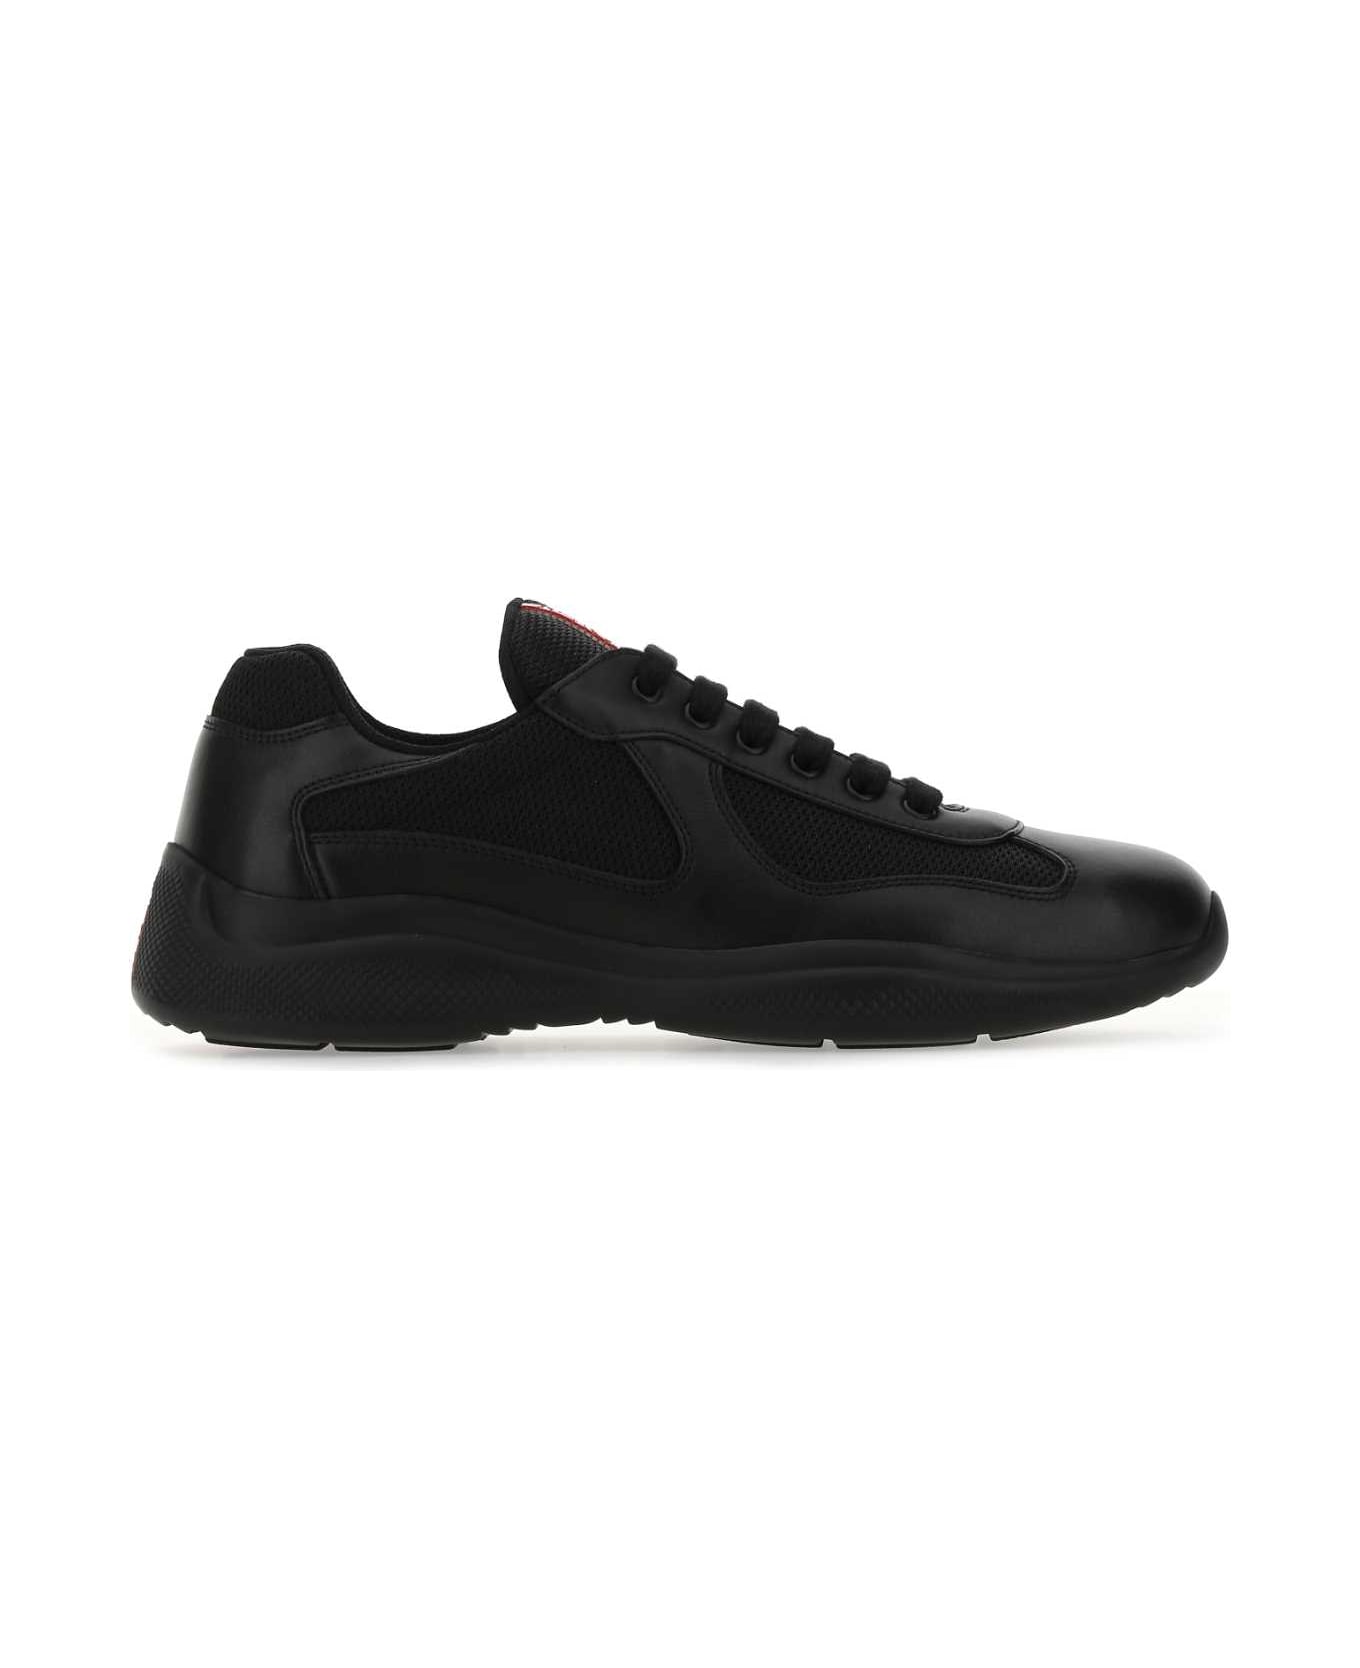 Prada Black Leather And Mesh Sneakers - F0002